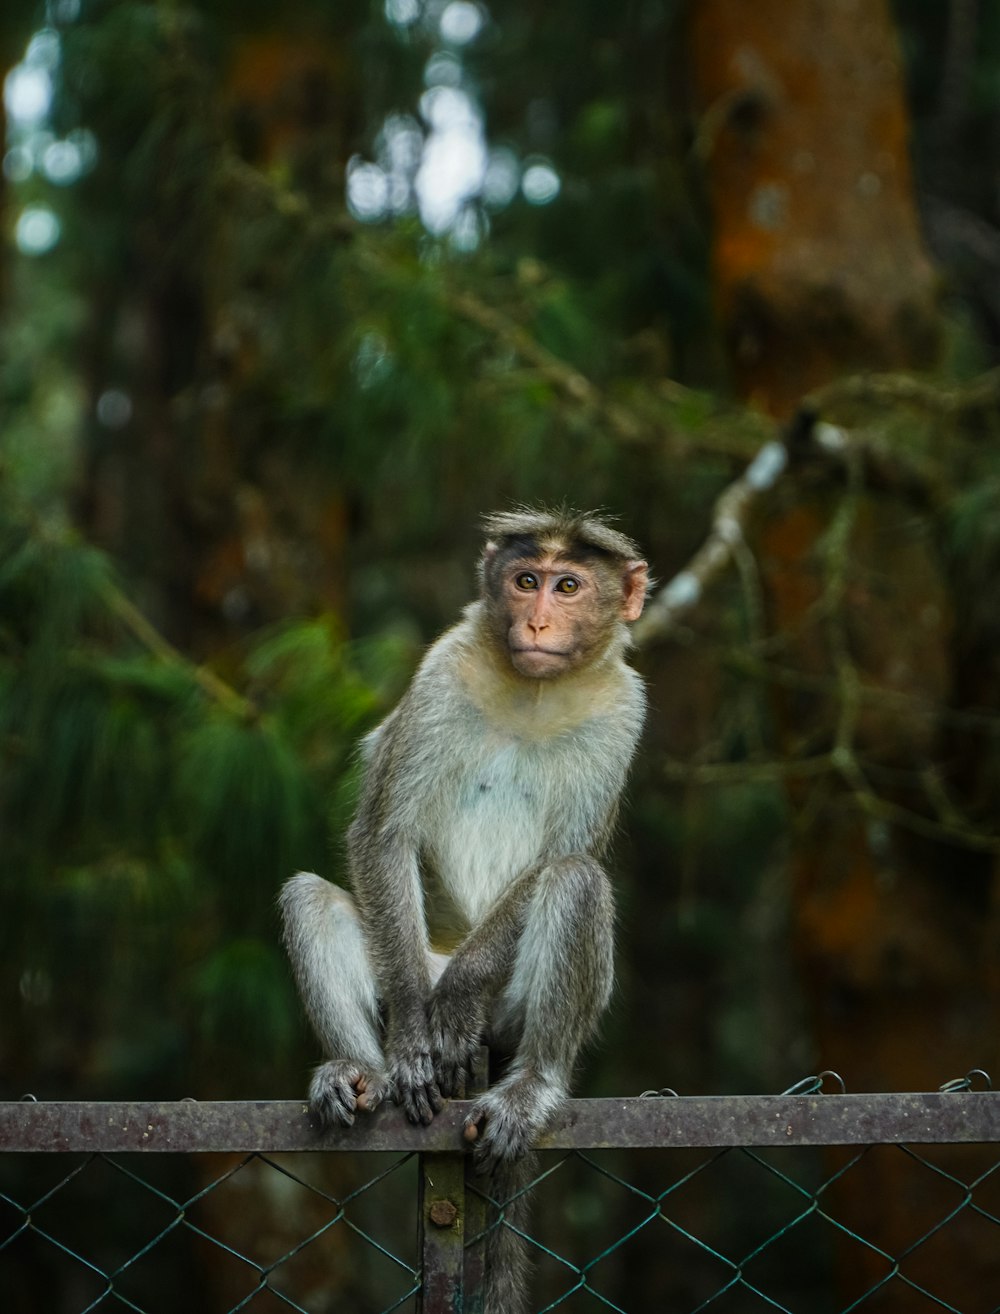 a monkey sitting on a fence